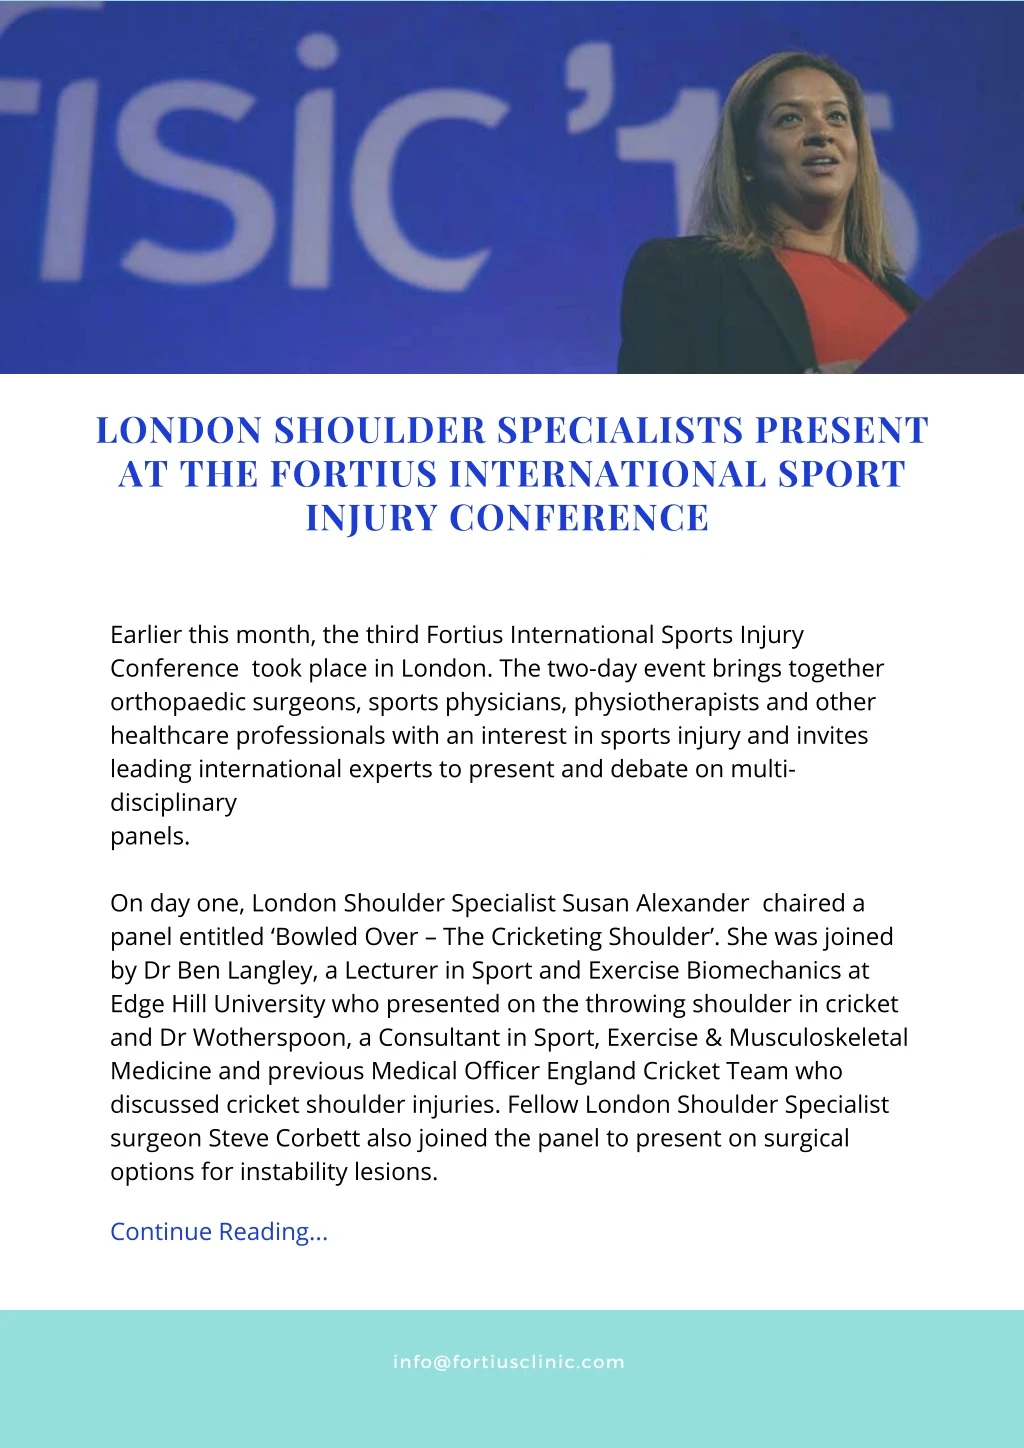 london shoulder specialists present